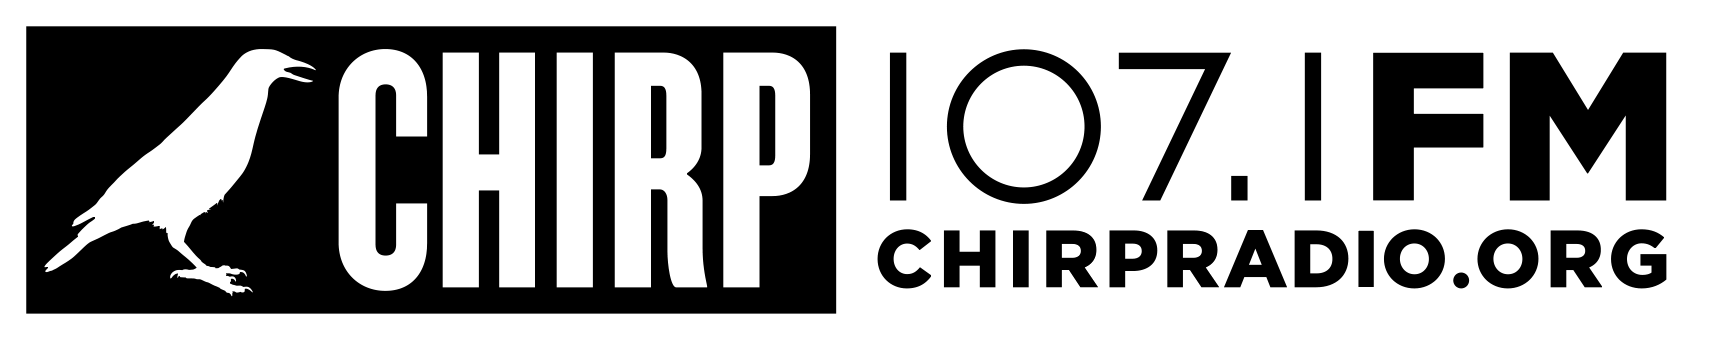 CHIRP Radio 107.1 FM